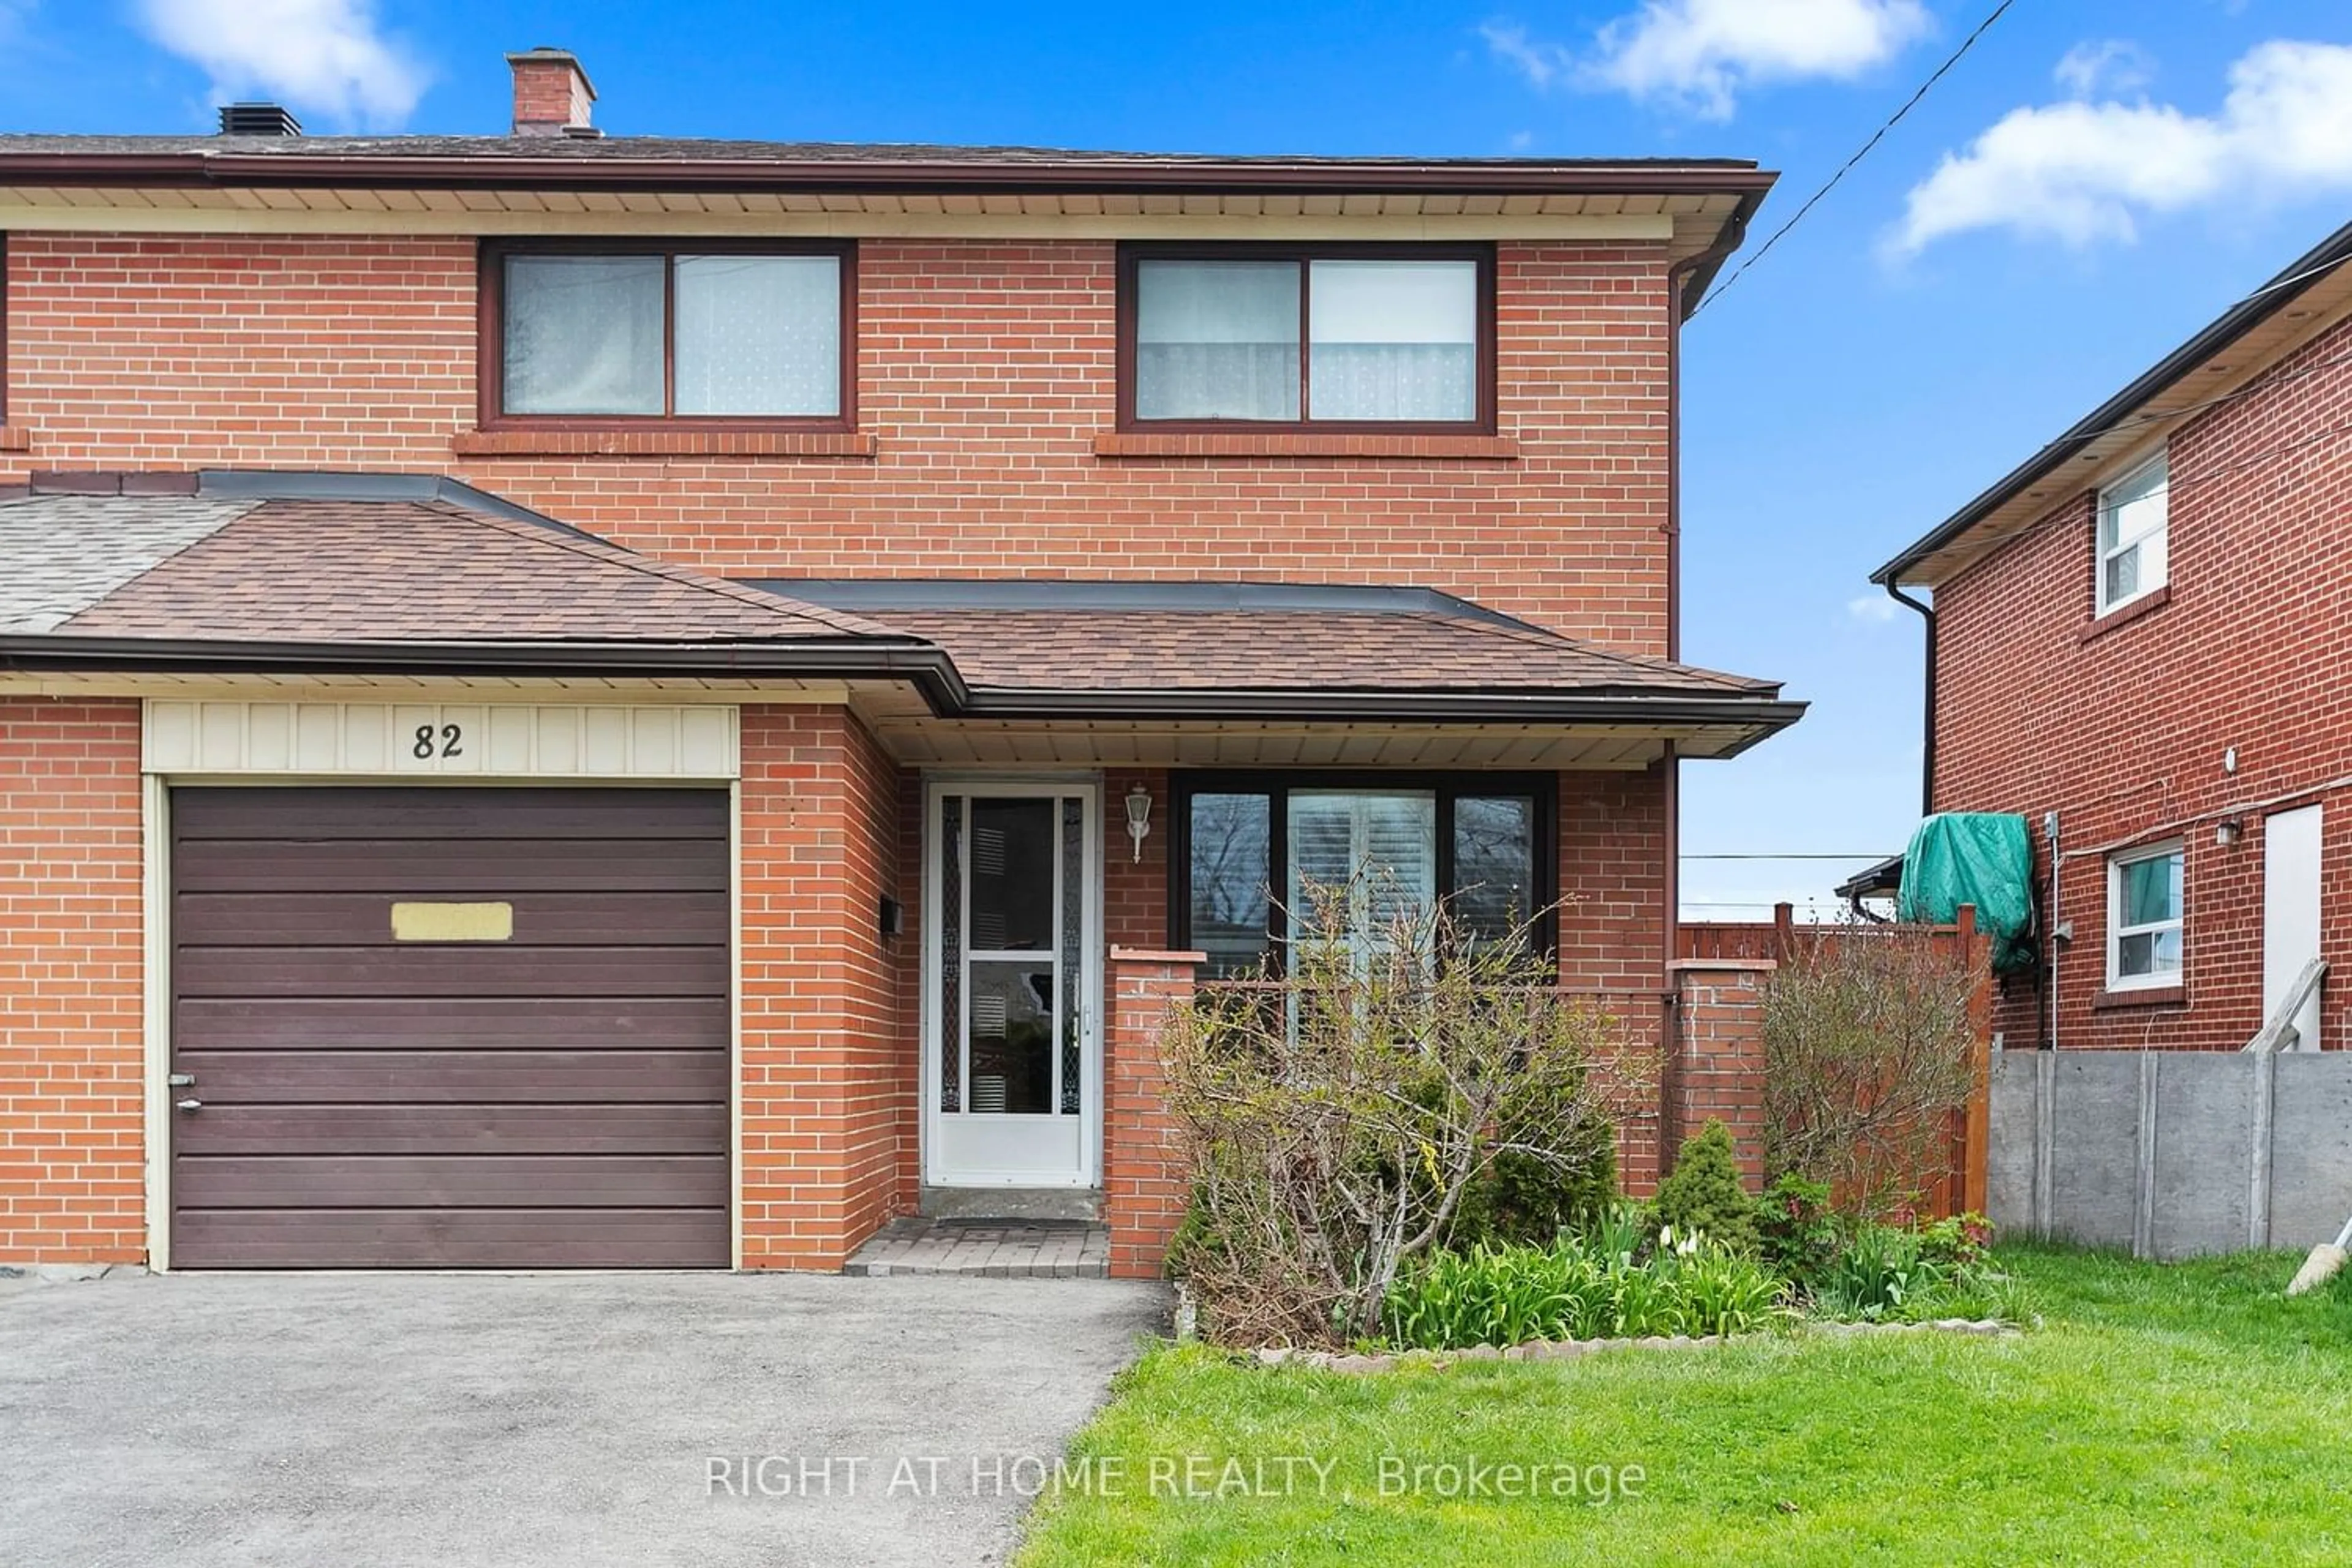 Home with brick exterior material for 82 Tanjoe Cres, Toronto Ontario M2M 1P7